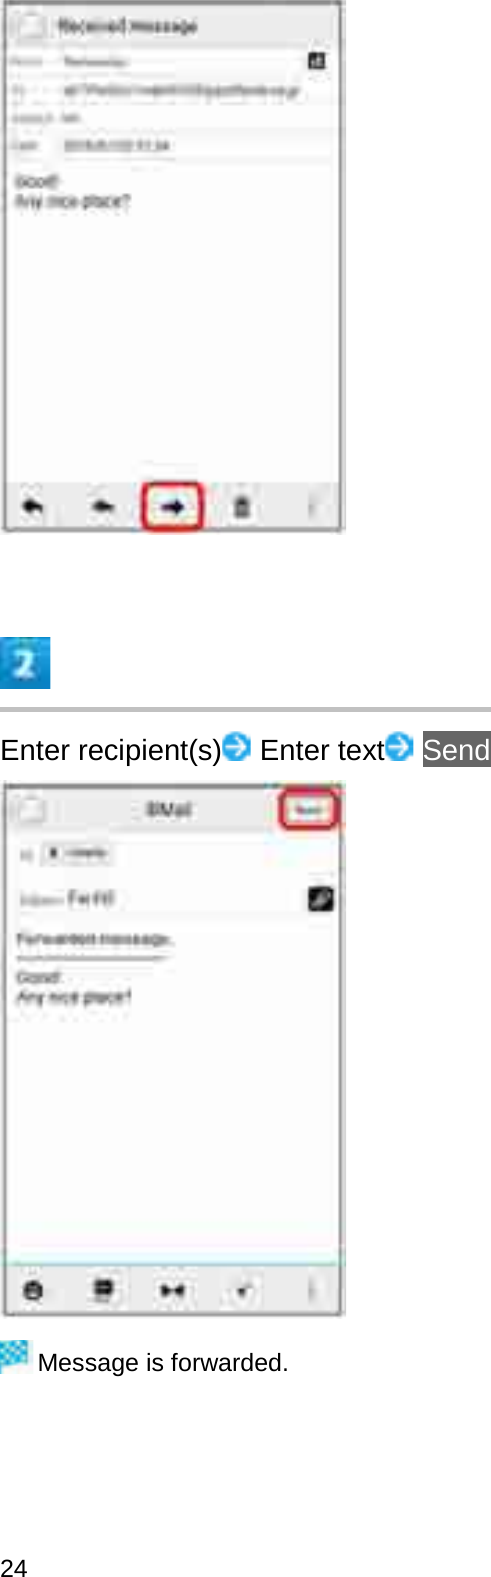 Enter recipient(s) Enter text SendMessage is forwarded.24